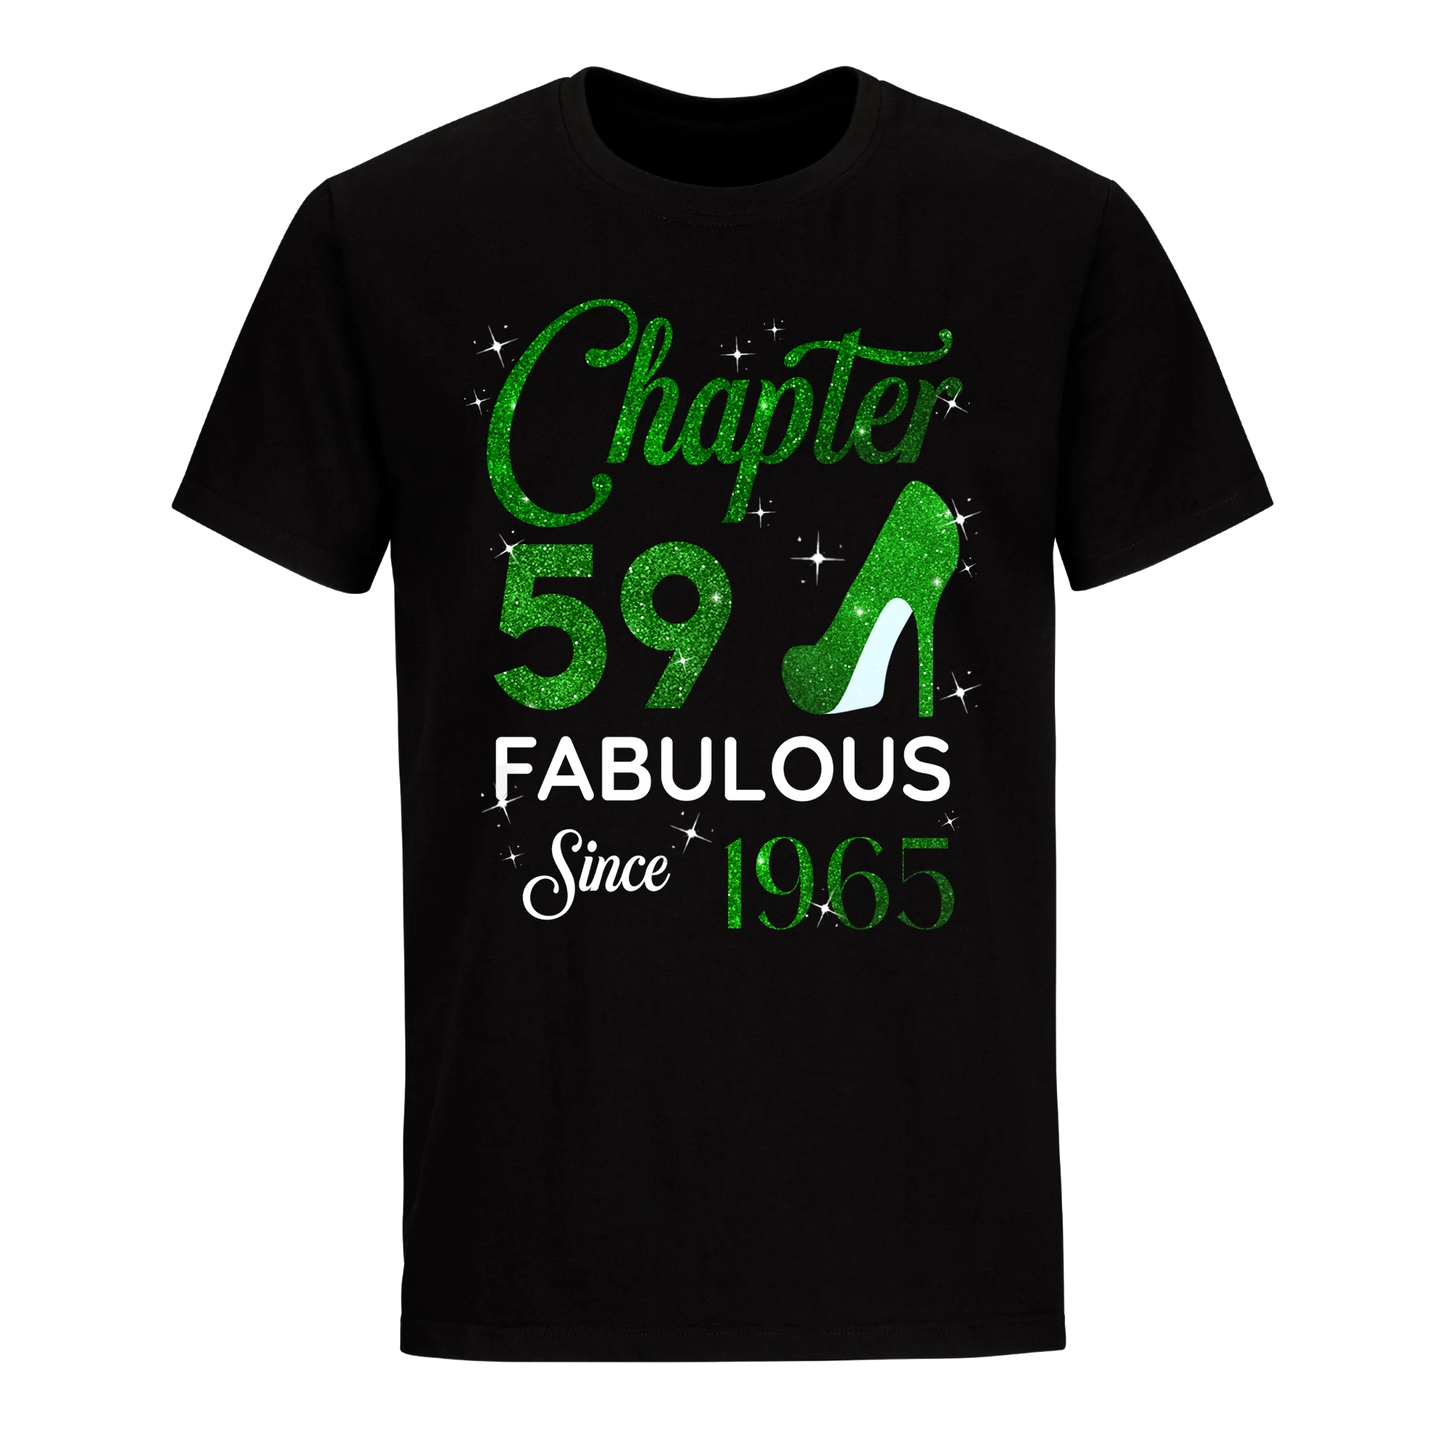 CHAPTER 59TH FABULOUS SINCE 1965 GREEN UNISEX SHIRT